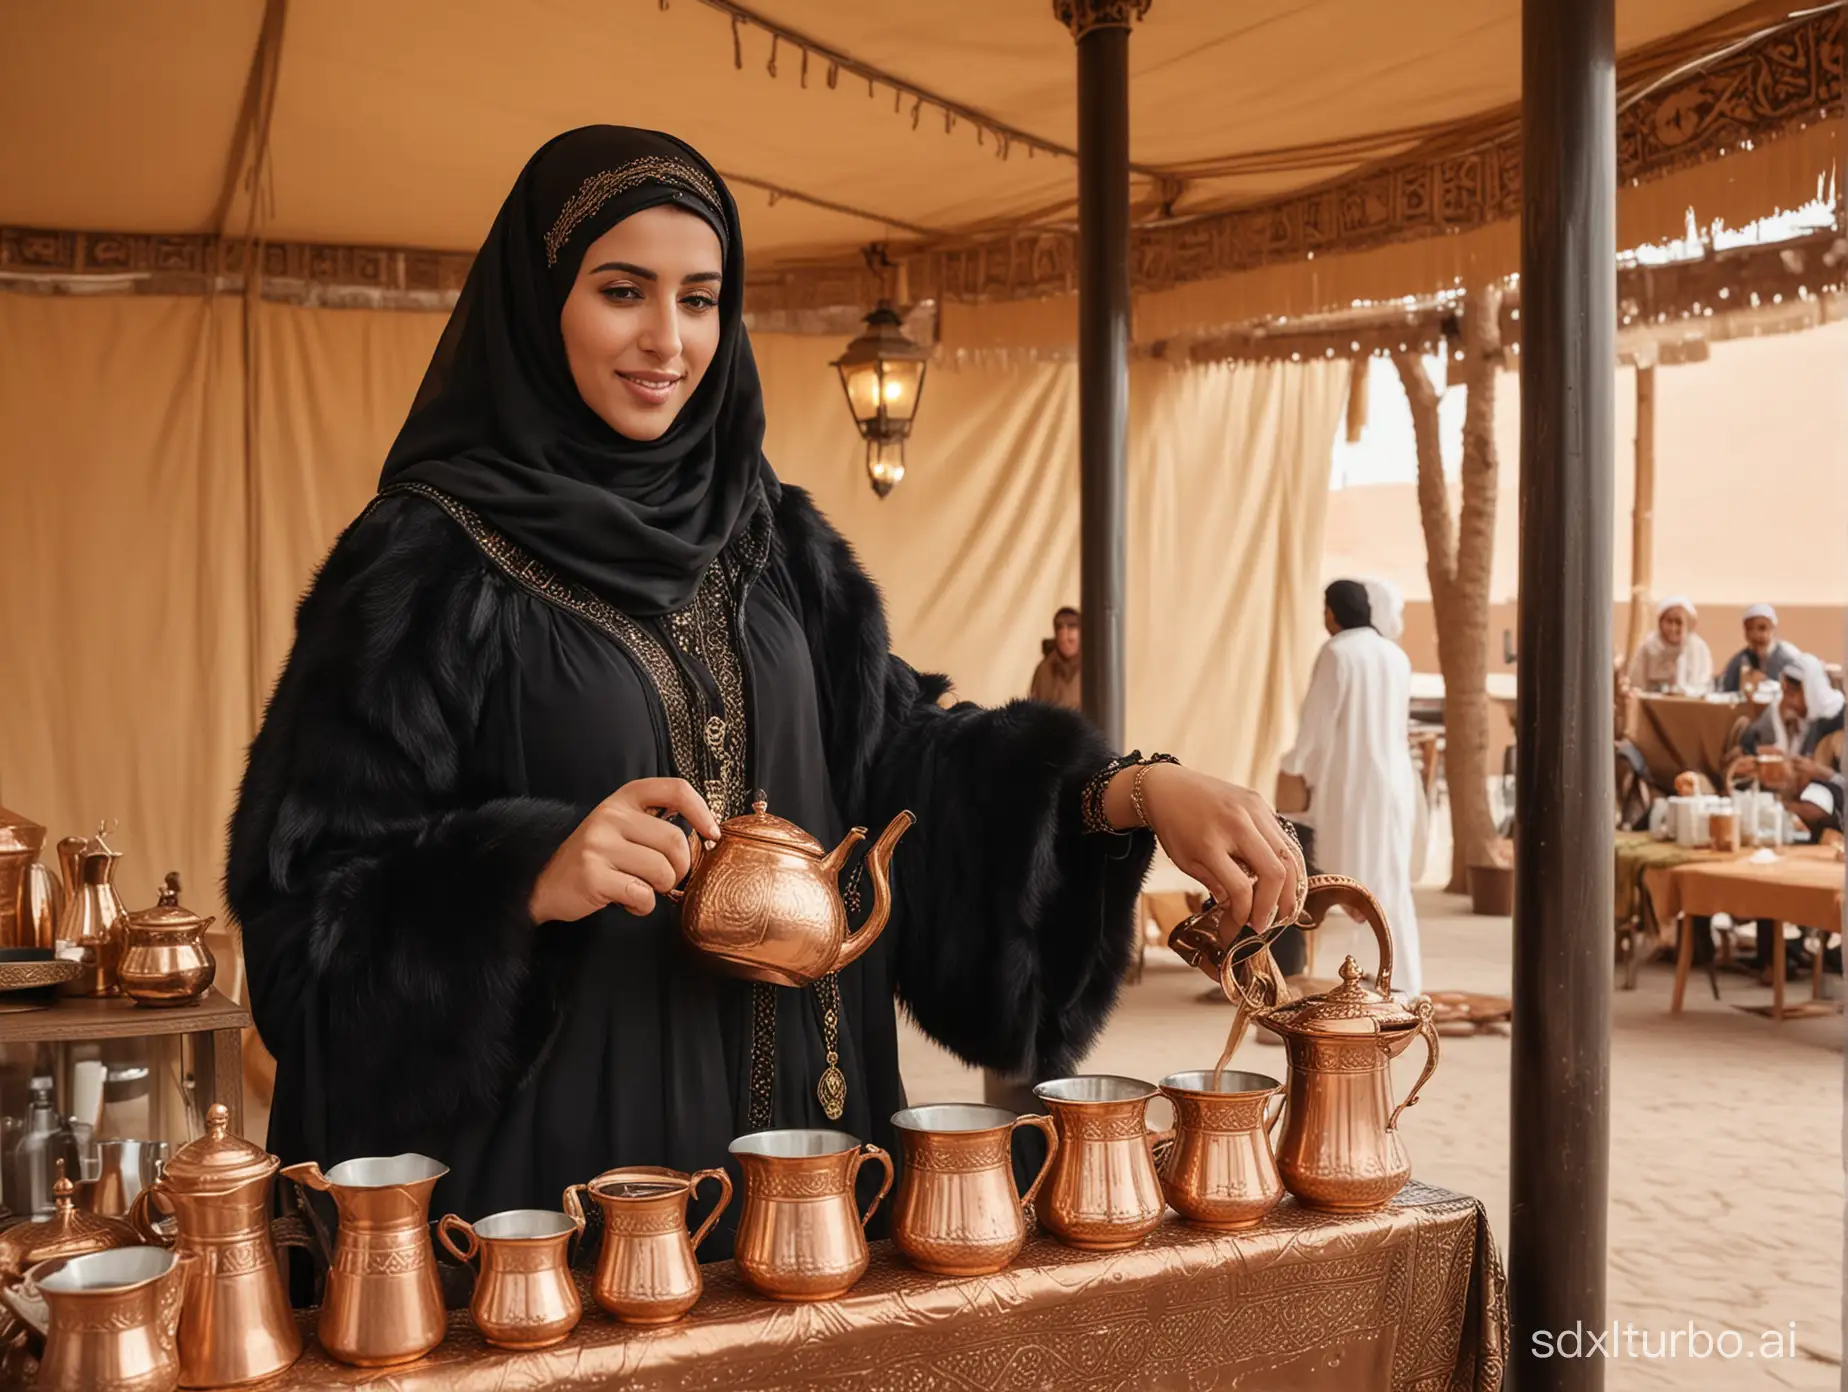 Saudi-Gulf-Arab-Woman-Pouring-Coffee-in-Decorated-Cups